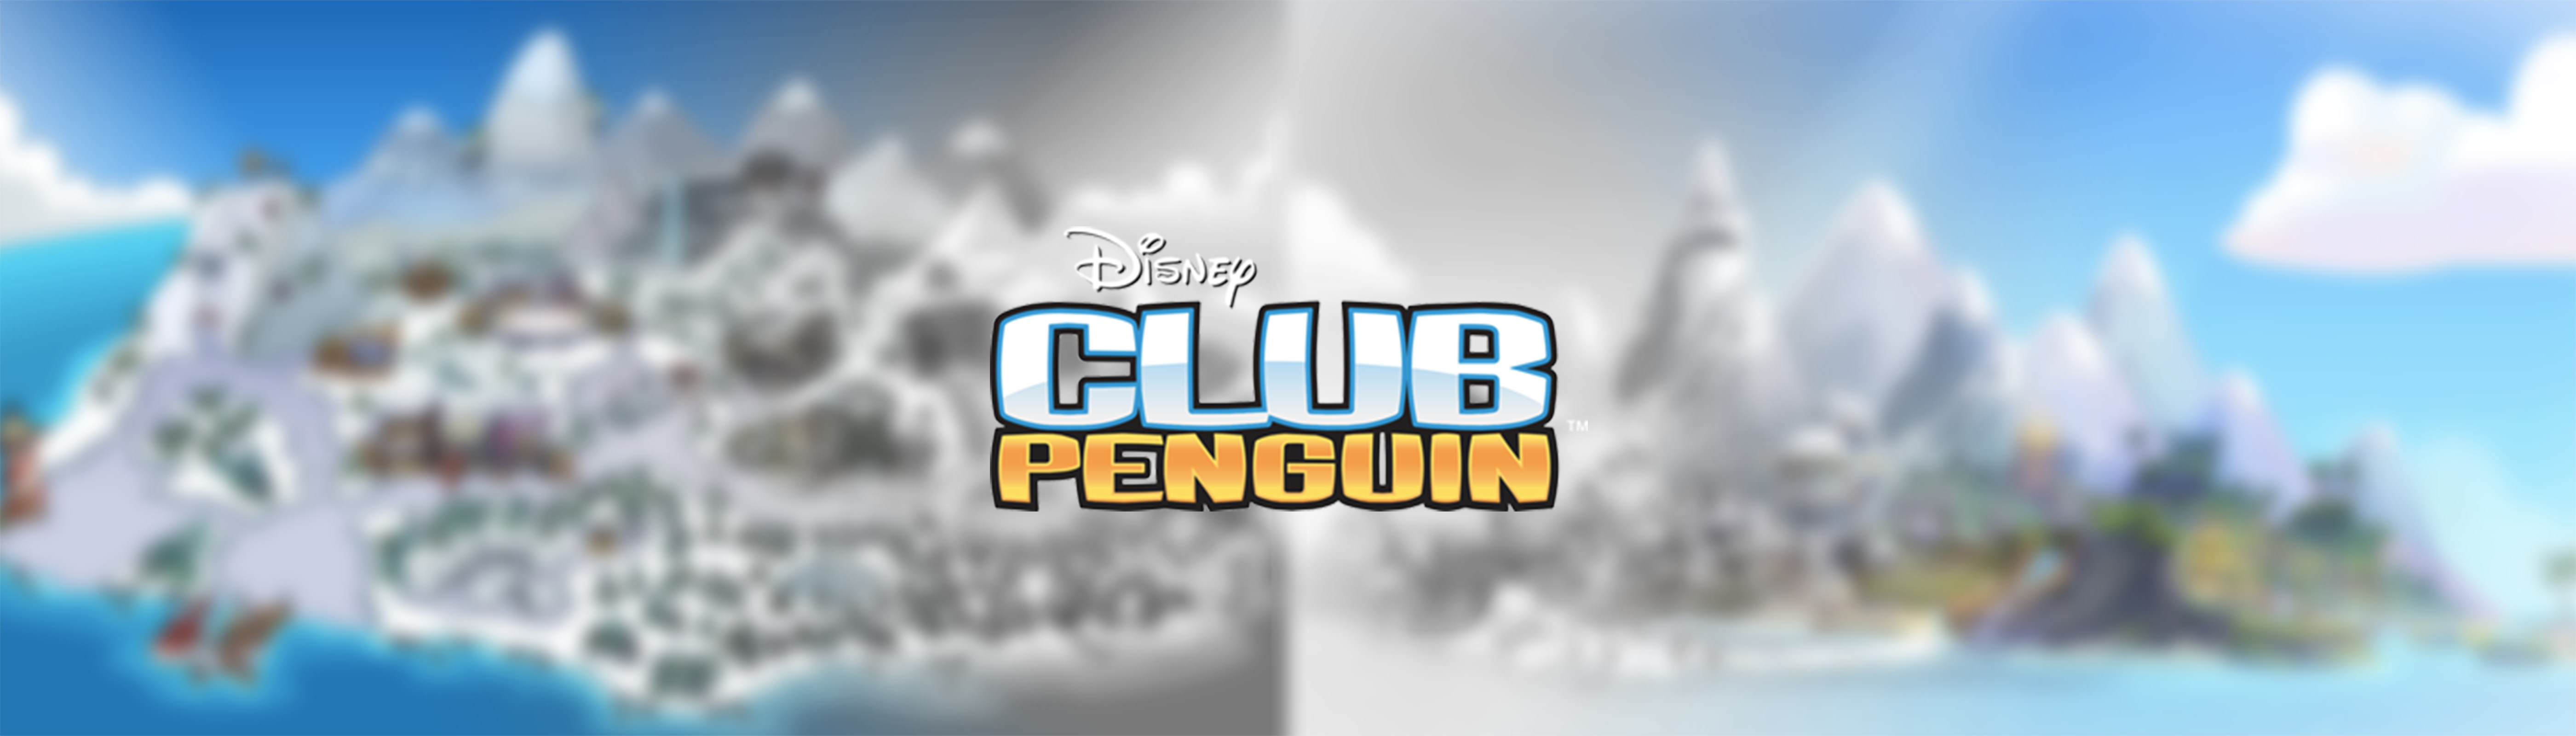 club penguin island offline mode